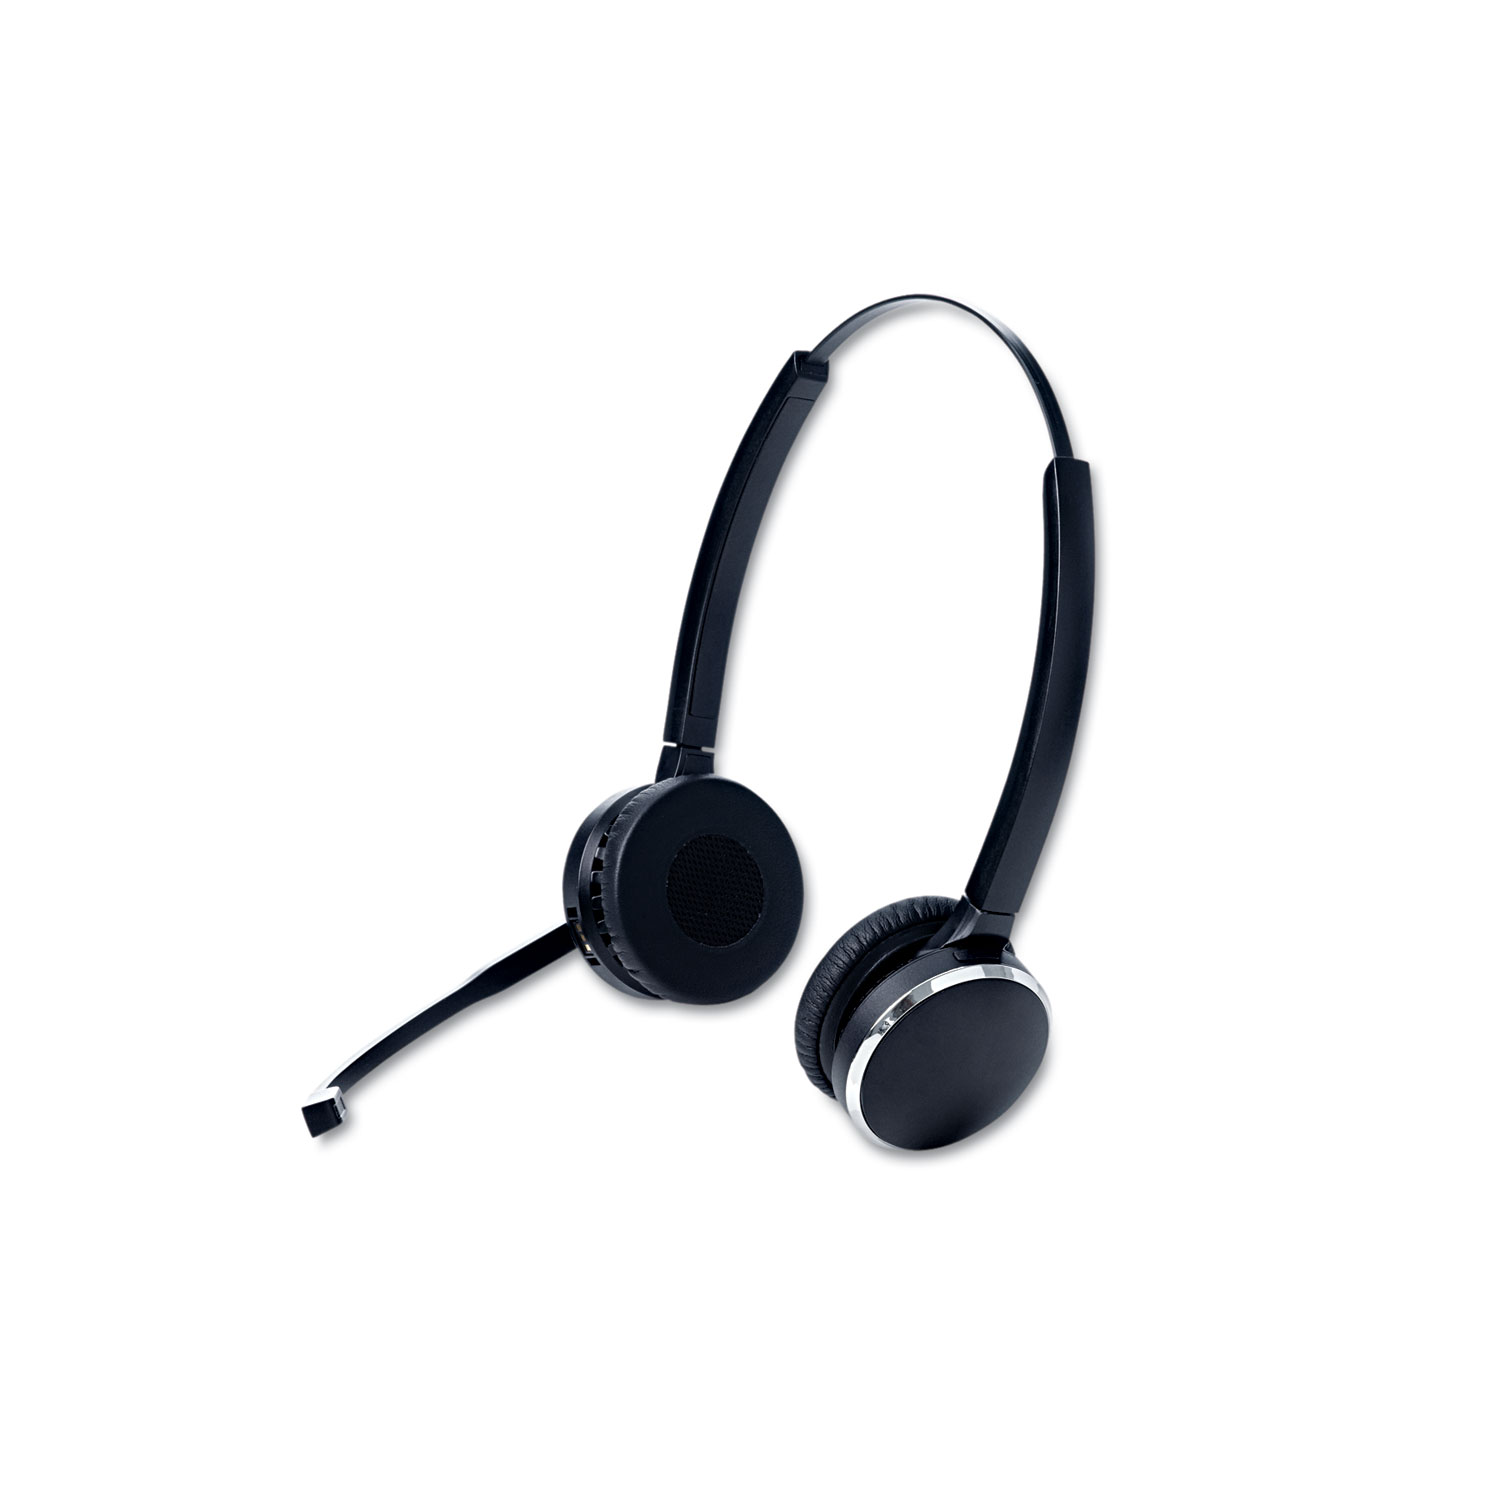 PRO 9465 Binaural Over-the-Head Wireless Headset